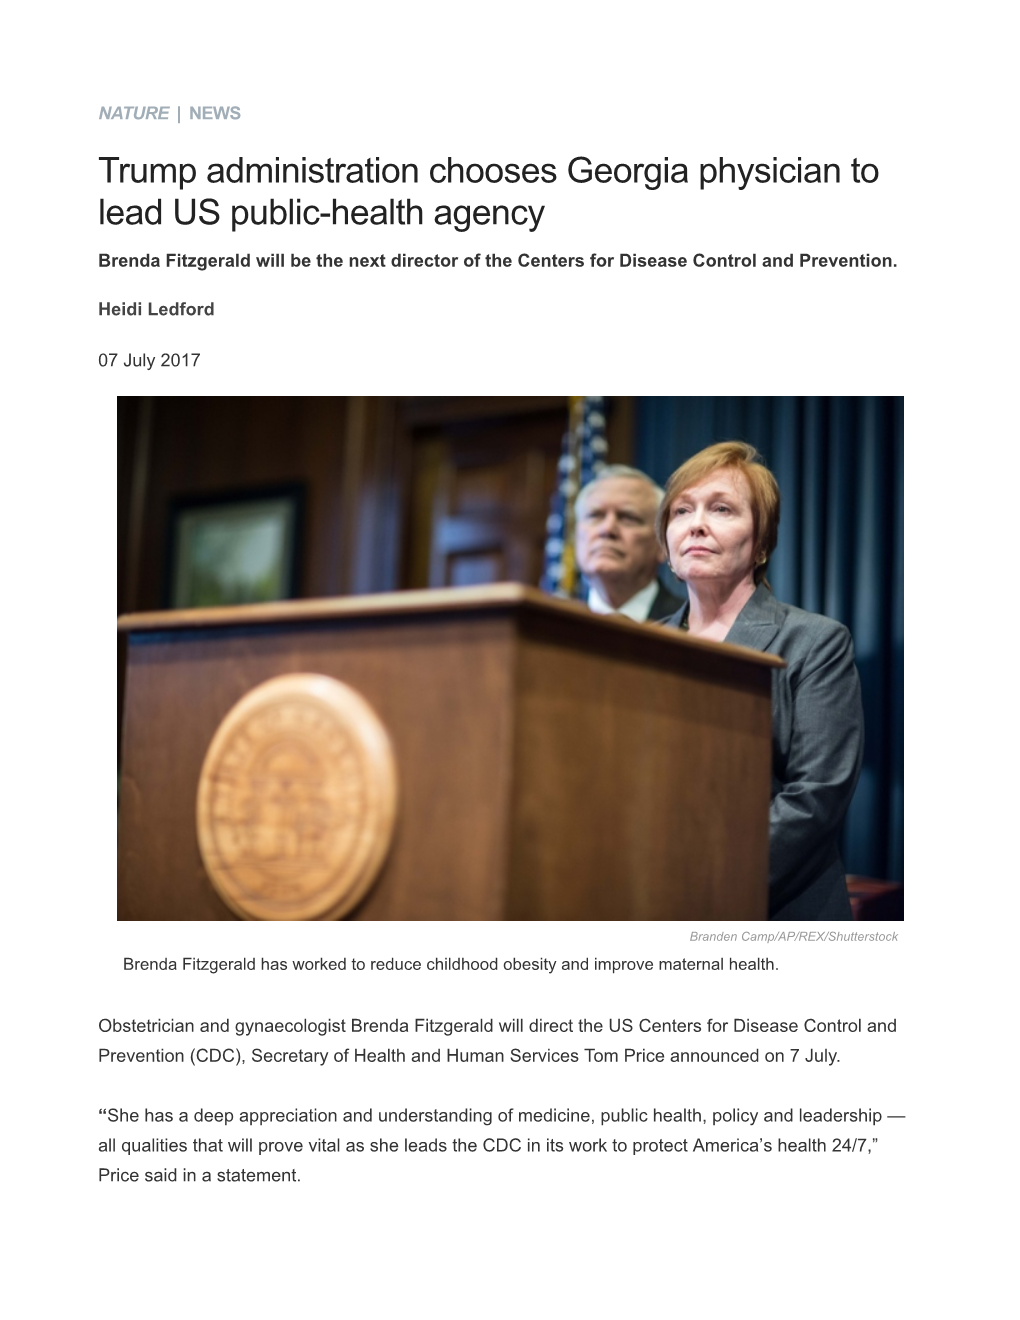 Trump Administration Chooses Georgia Physician to Lead US Public-Health Agency